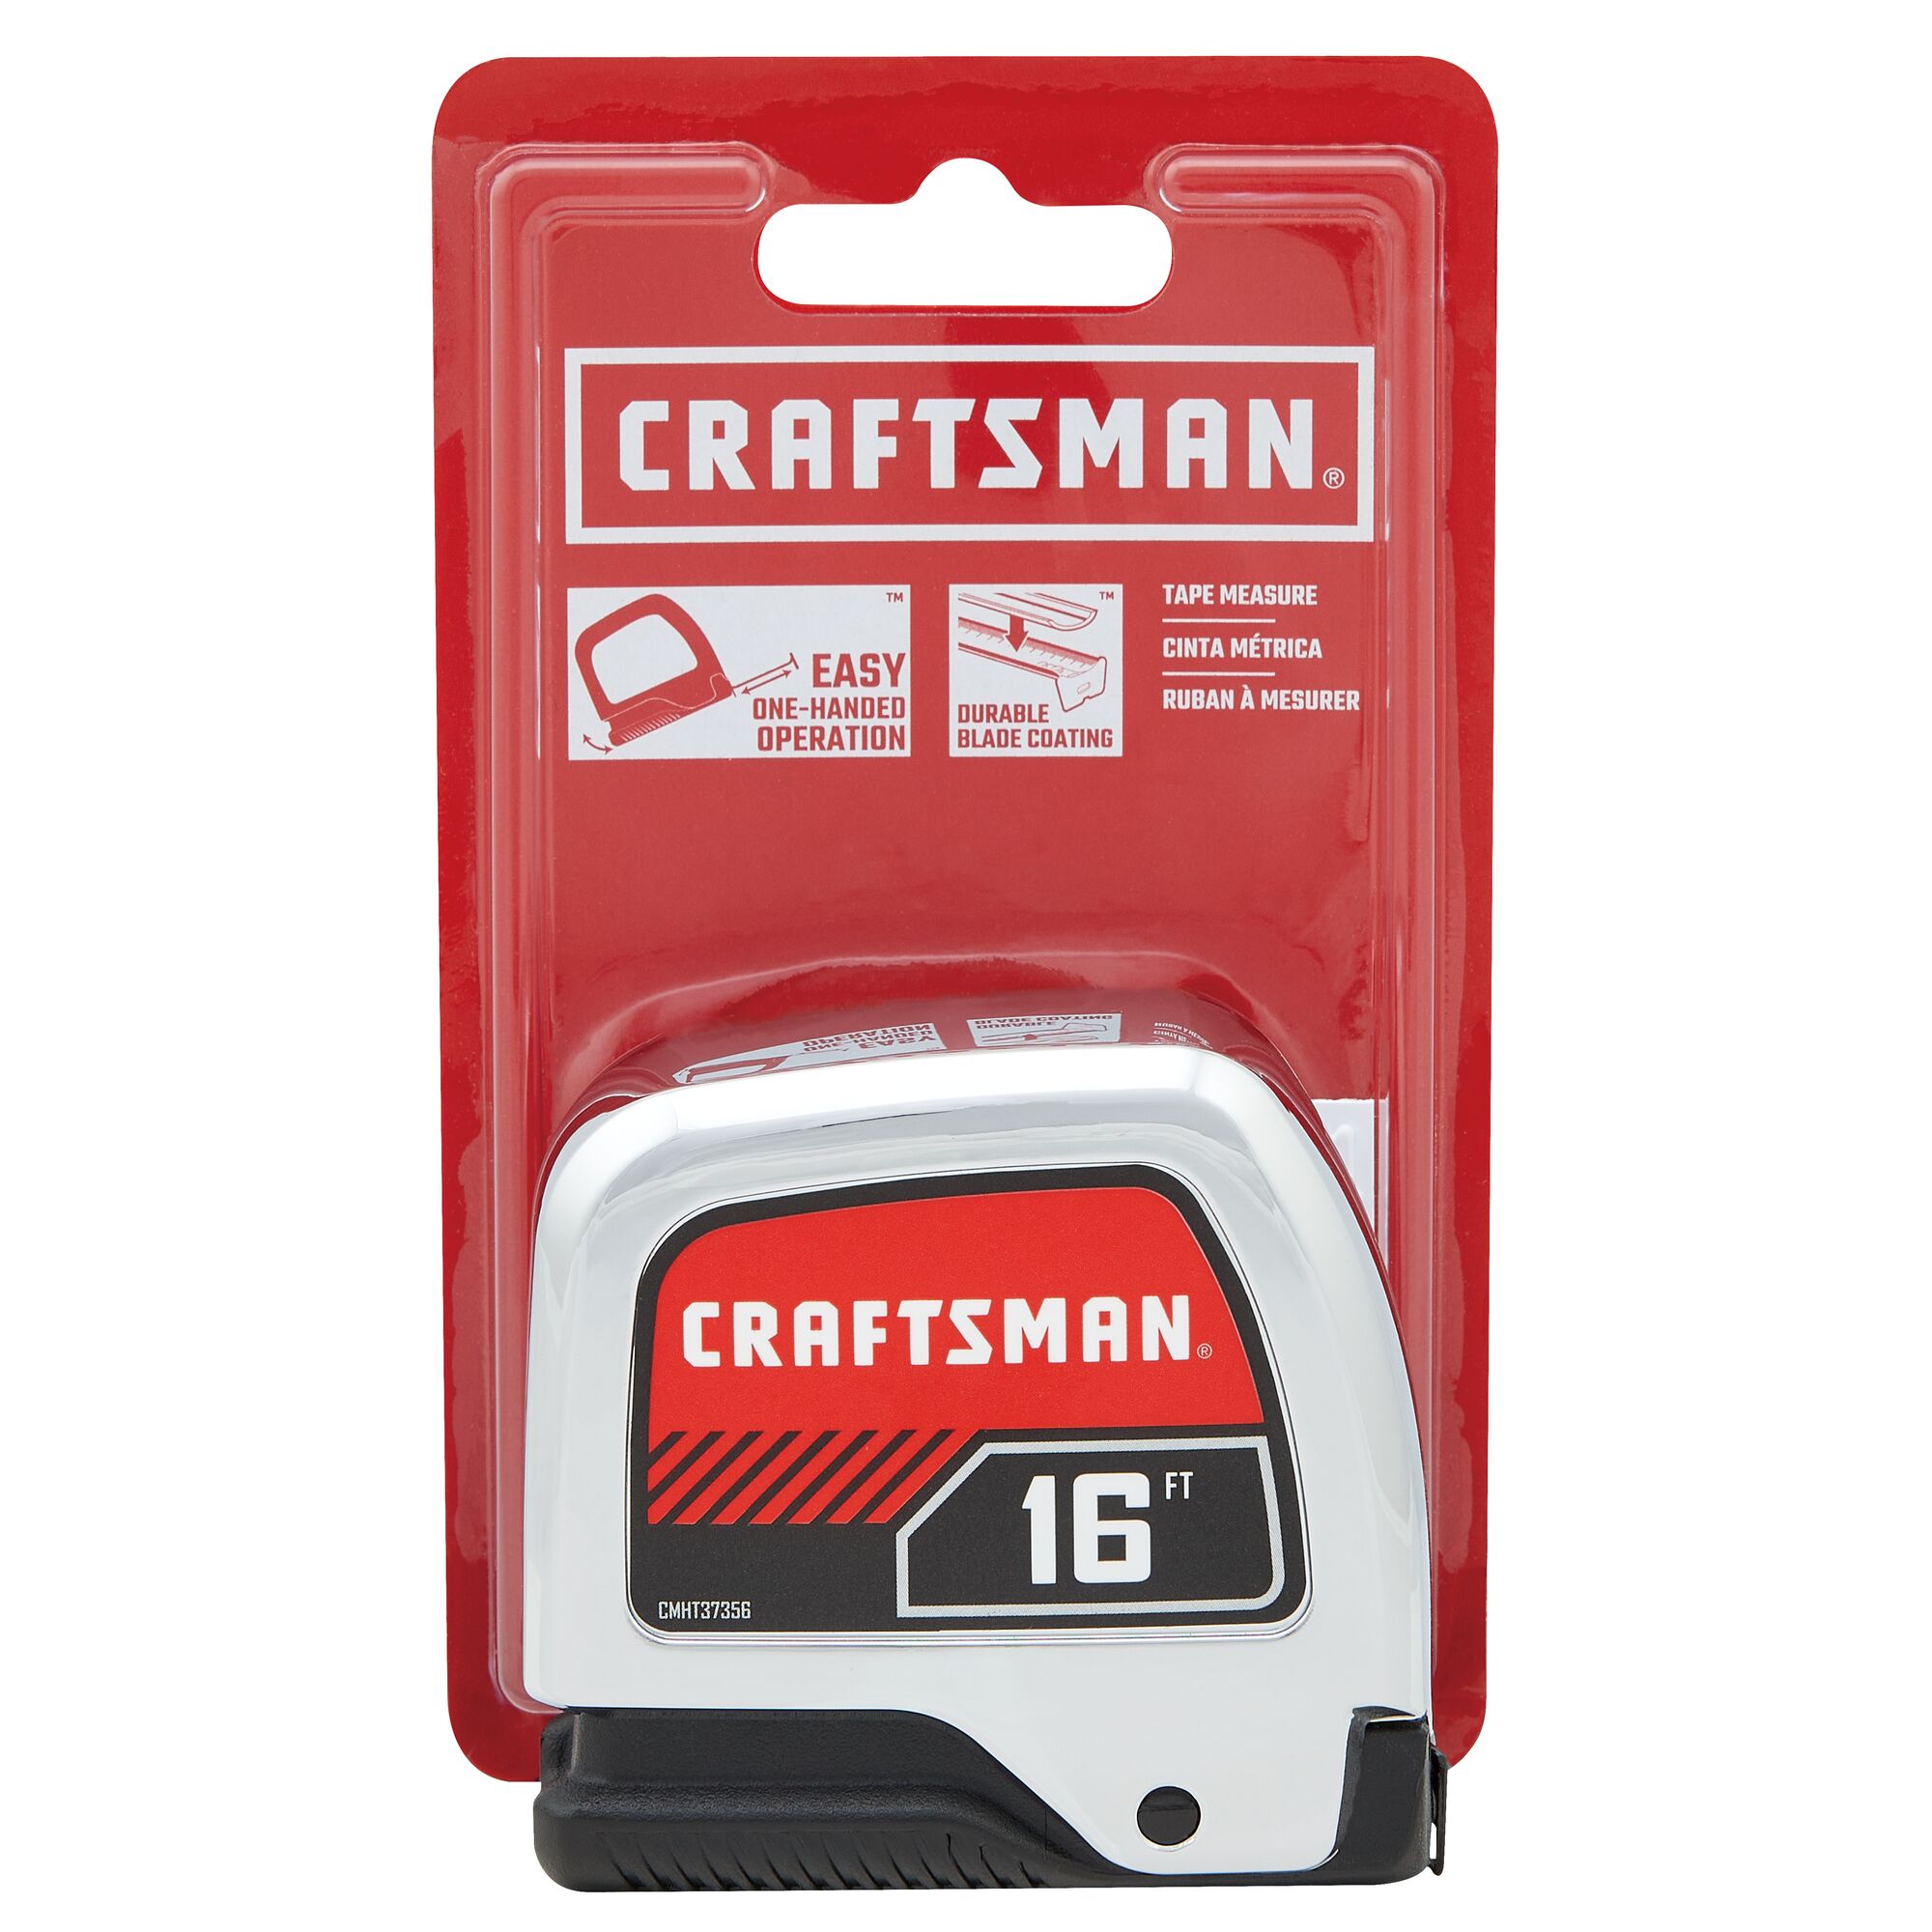 Craftsman 16-ft Auto Lock Tape Measure (CMHT37356S)